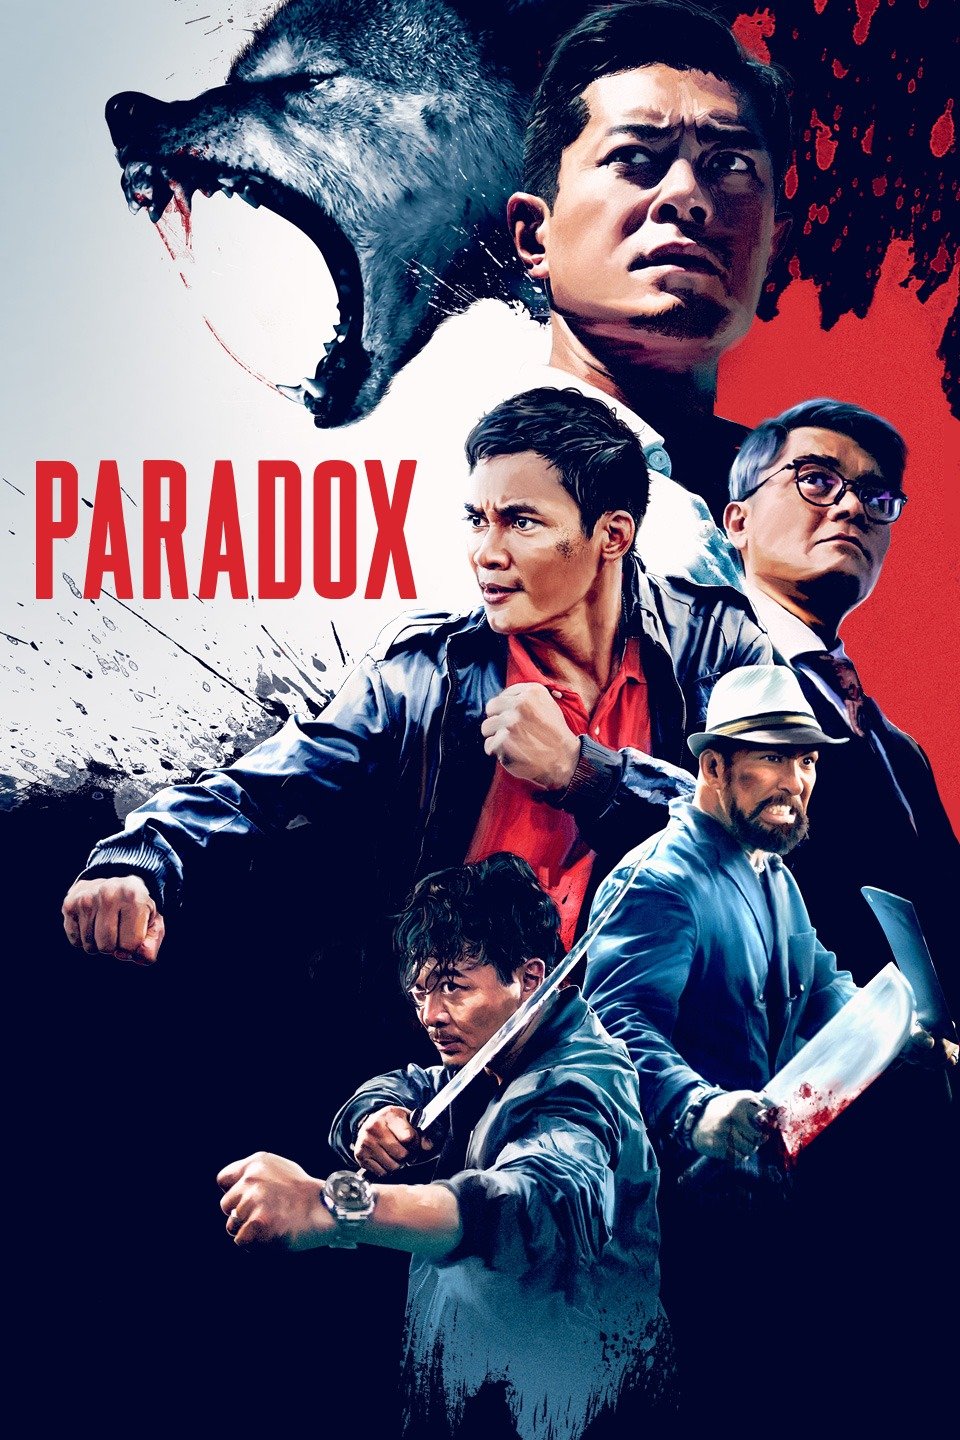 [MINI Super-HQ] Paradox (2017) เดือด ซัด ดิบ [1080p] [พากย์ไทย 5.1 + เสียงจีน DTS] [บรรยายไทย + อังกฤษ] [เสียงไทย + ซับไทย] [OPENLOAD]